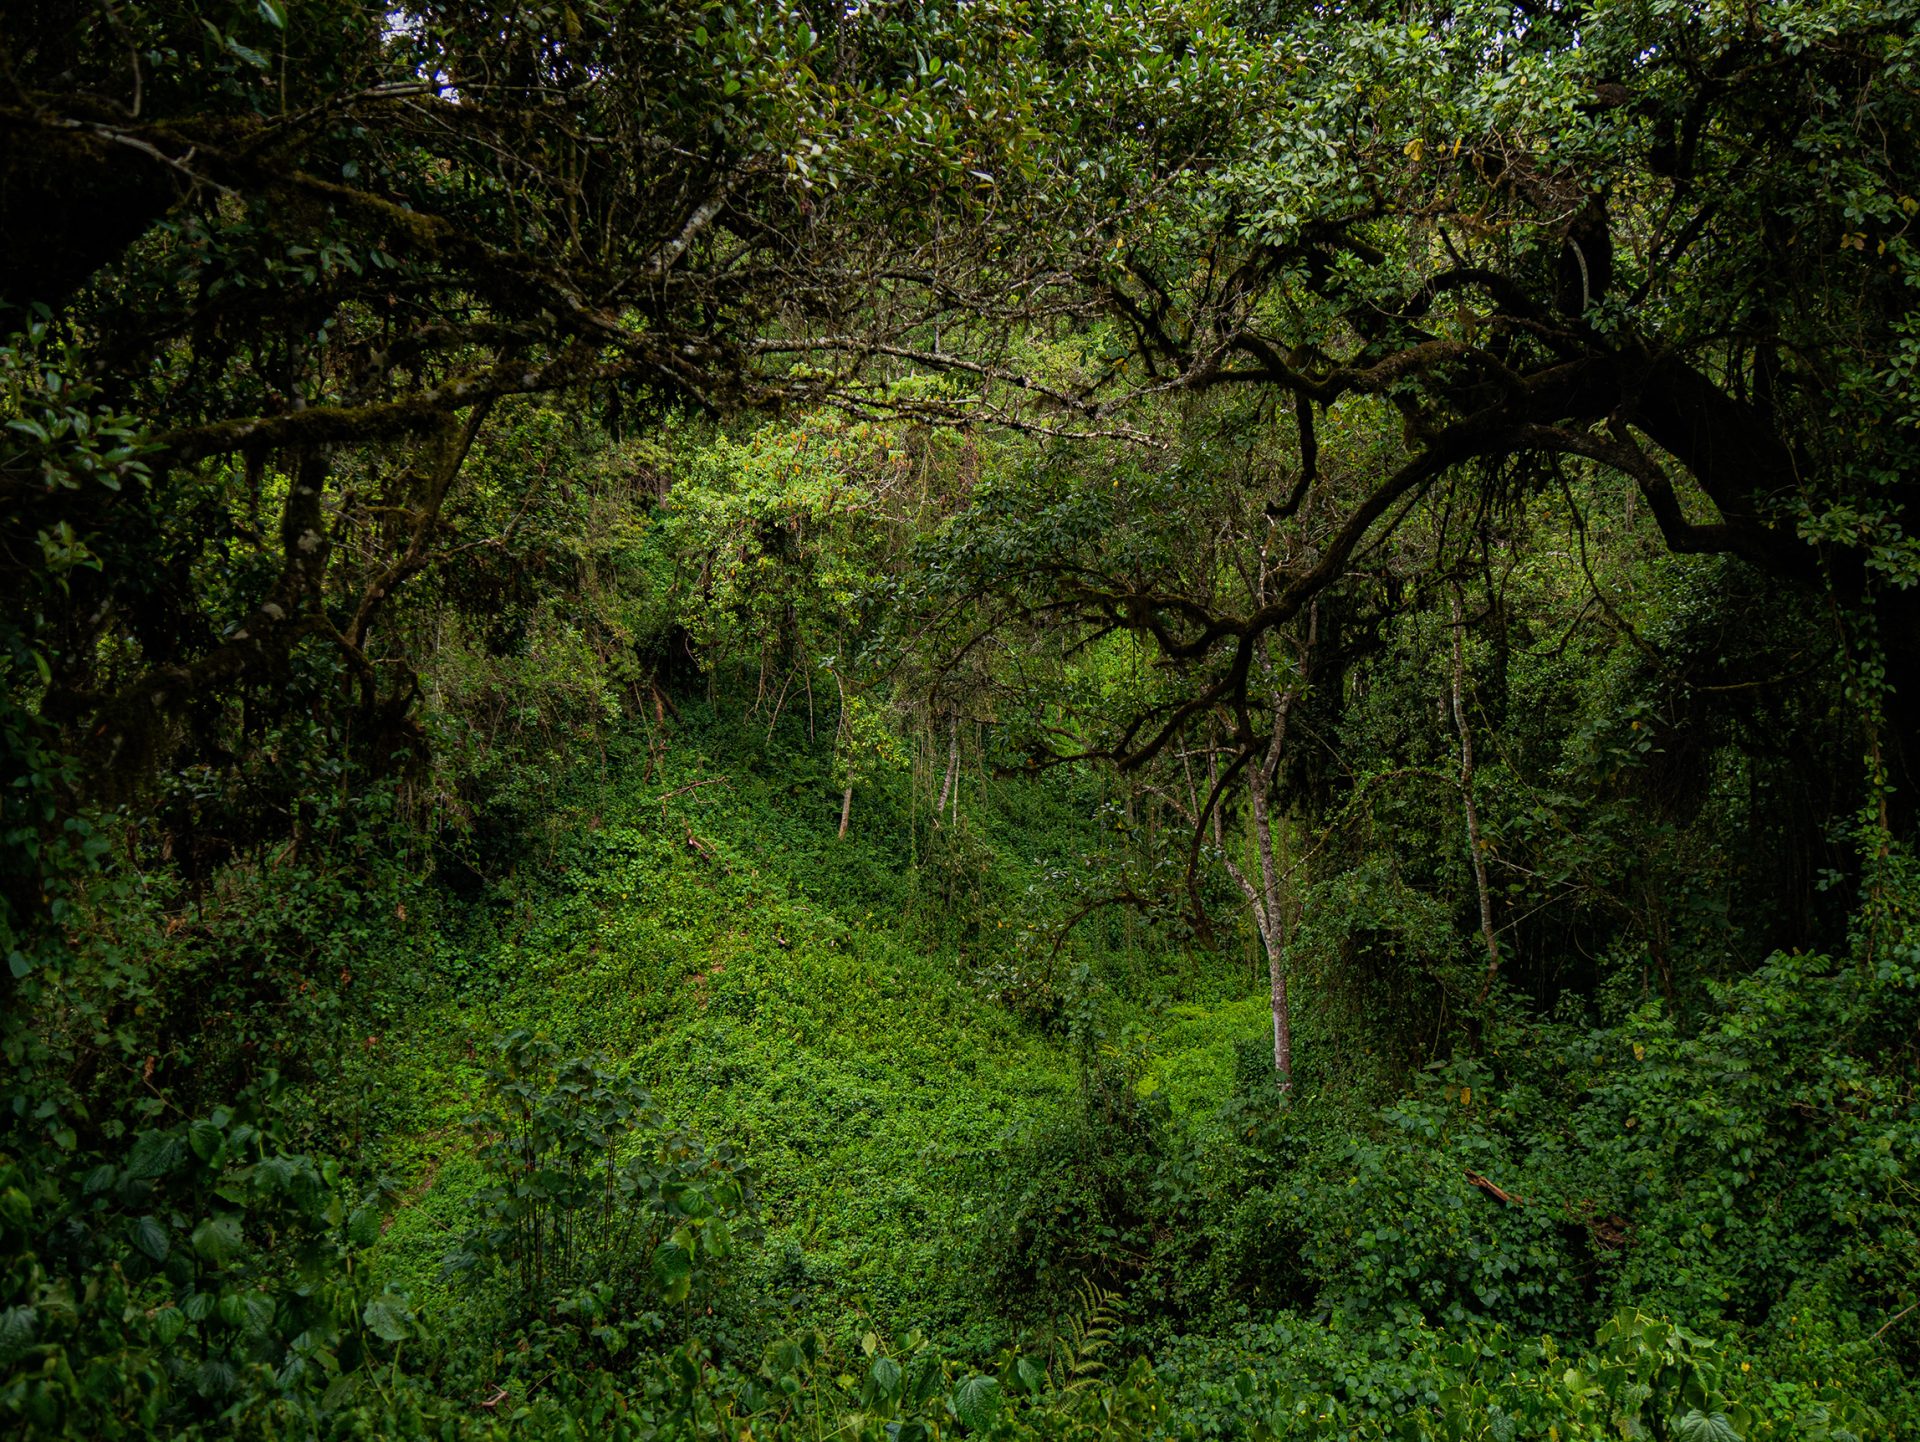 Rainforest scenery in Kili